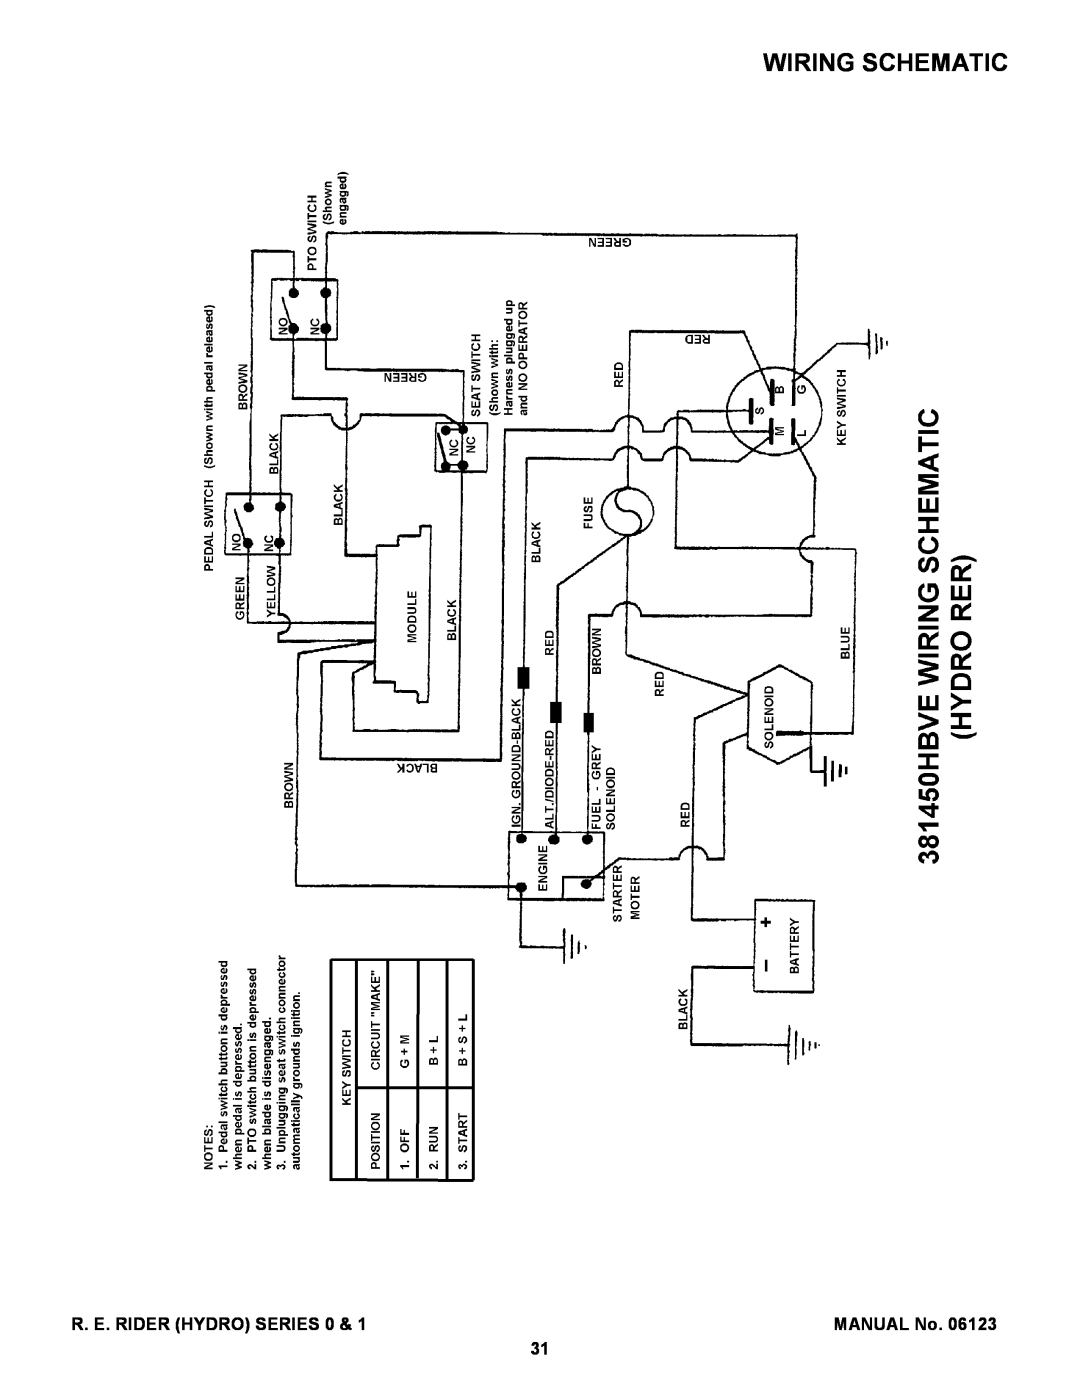 Snapper 381450HBVE manual Wiring Schematic, R. E. Rider Hydro Series 